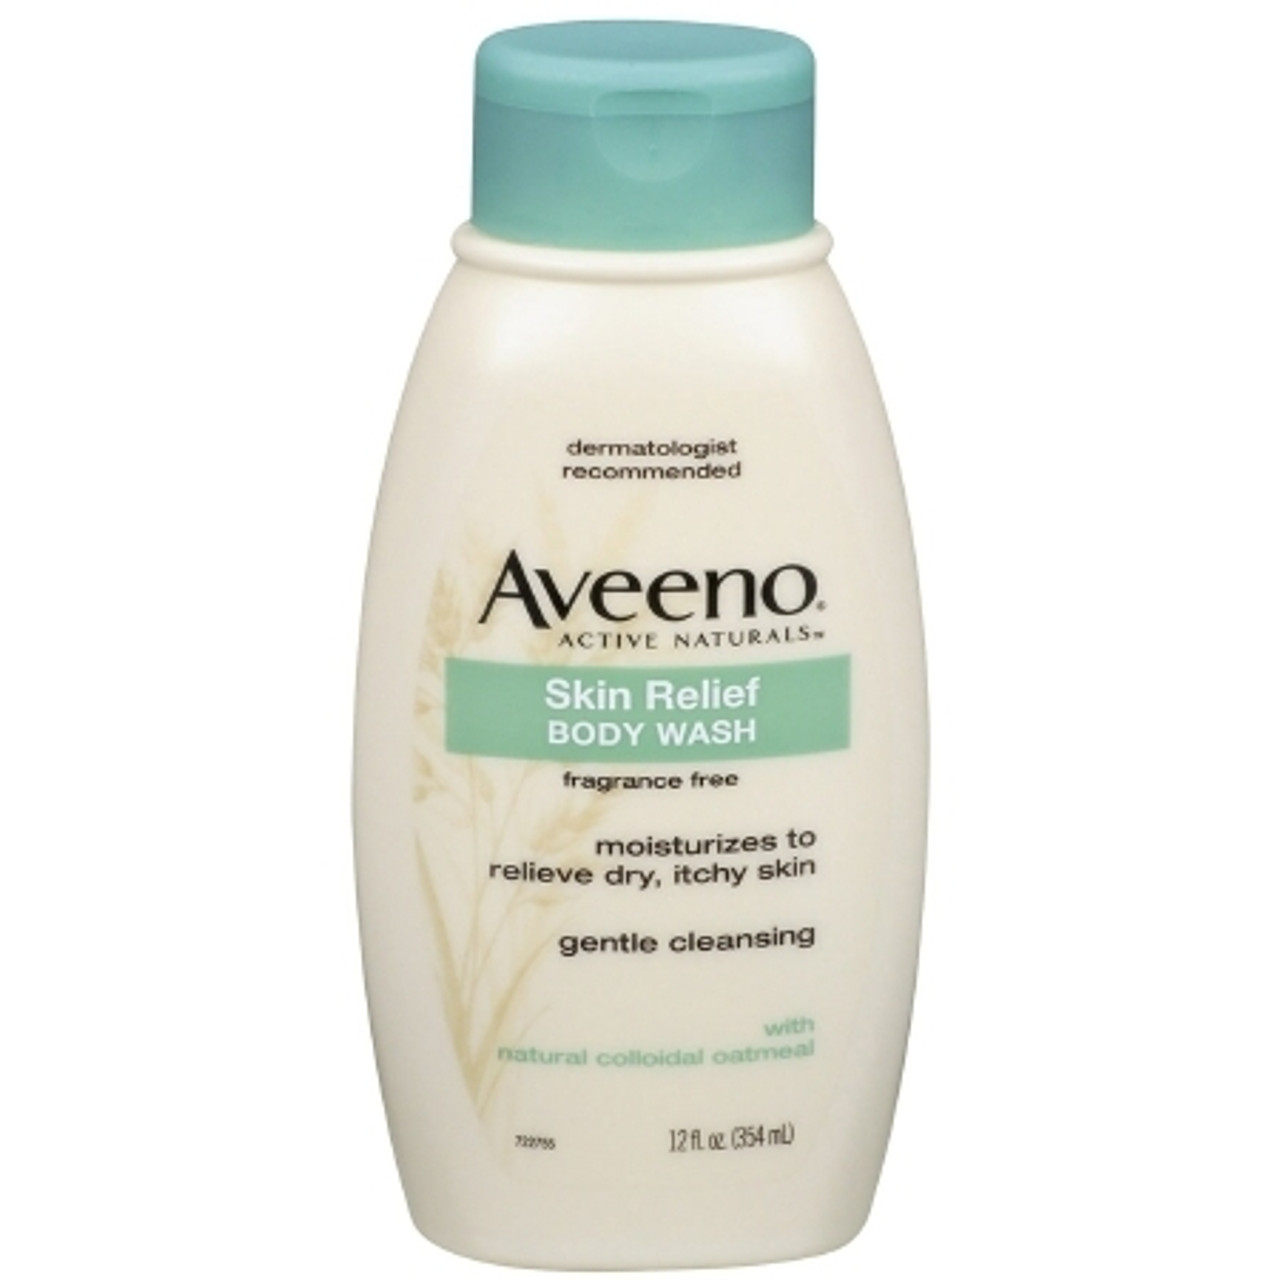  Aveeno Active Naturals Skin Relief Body Wash